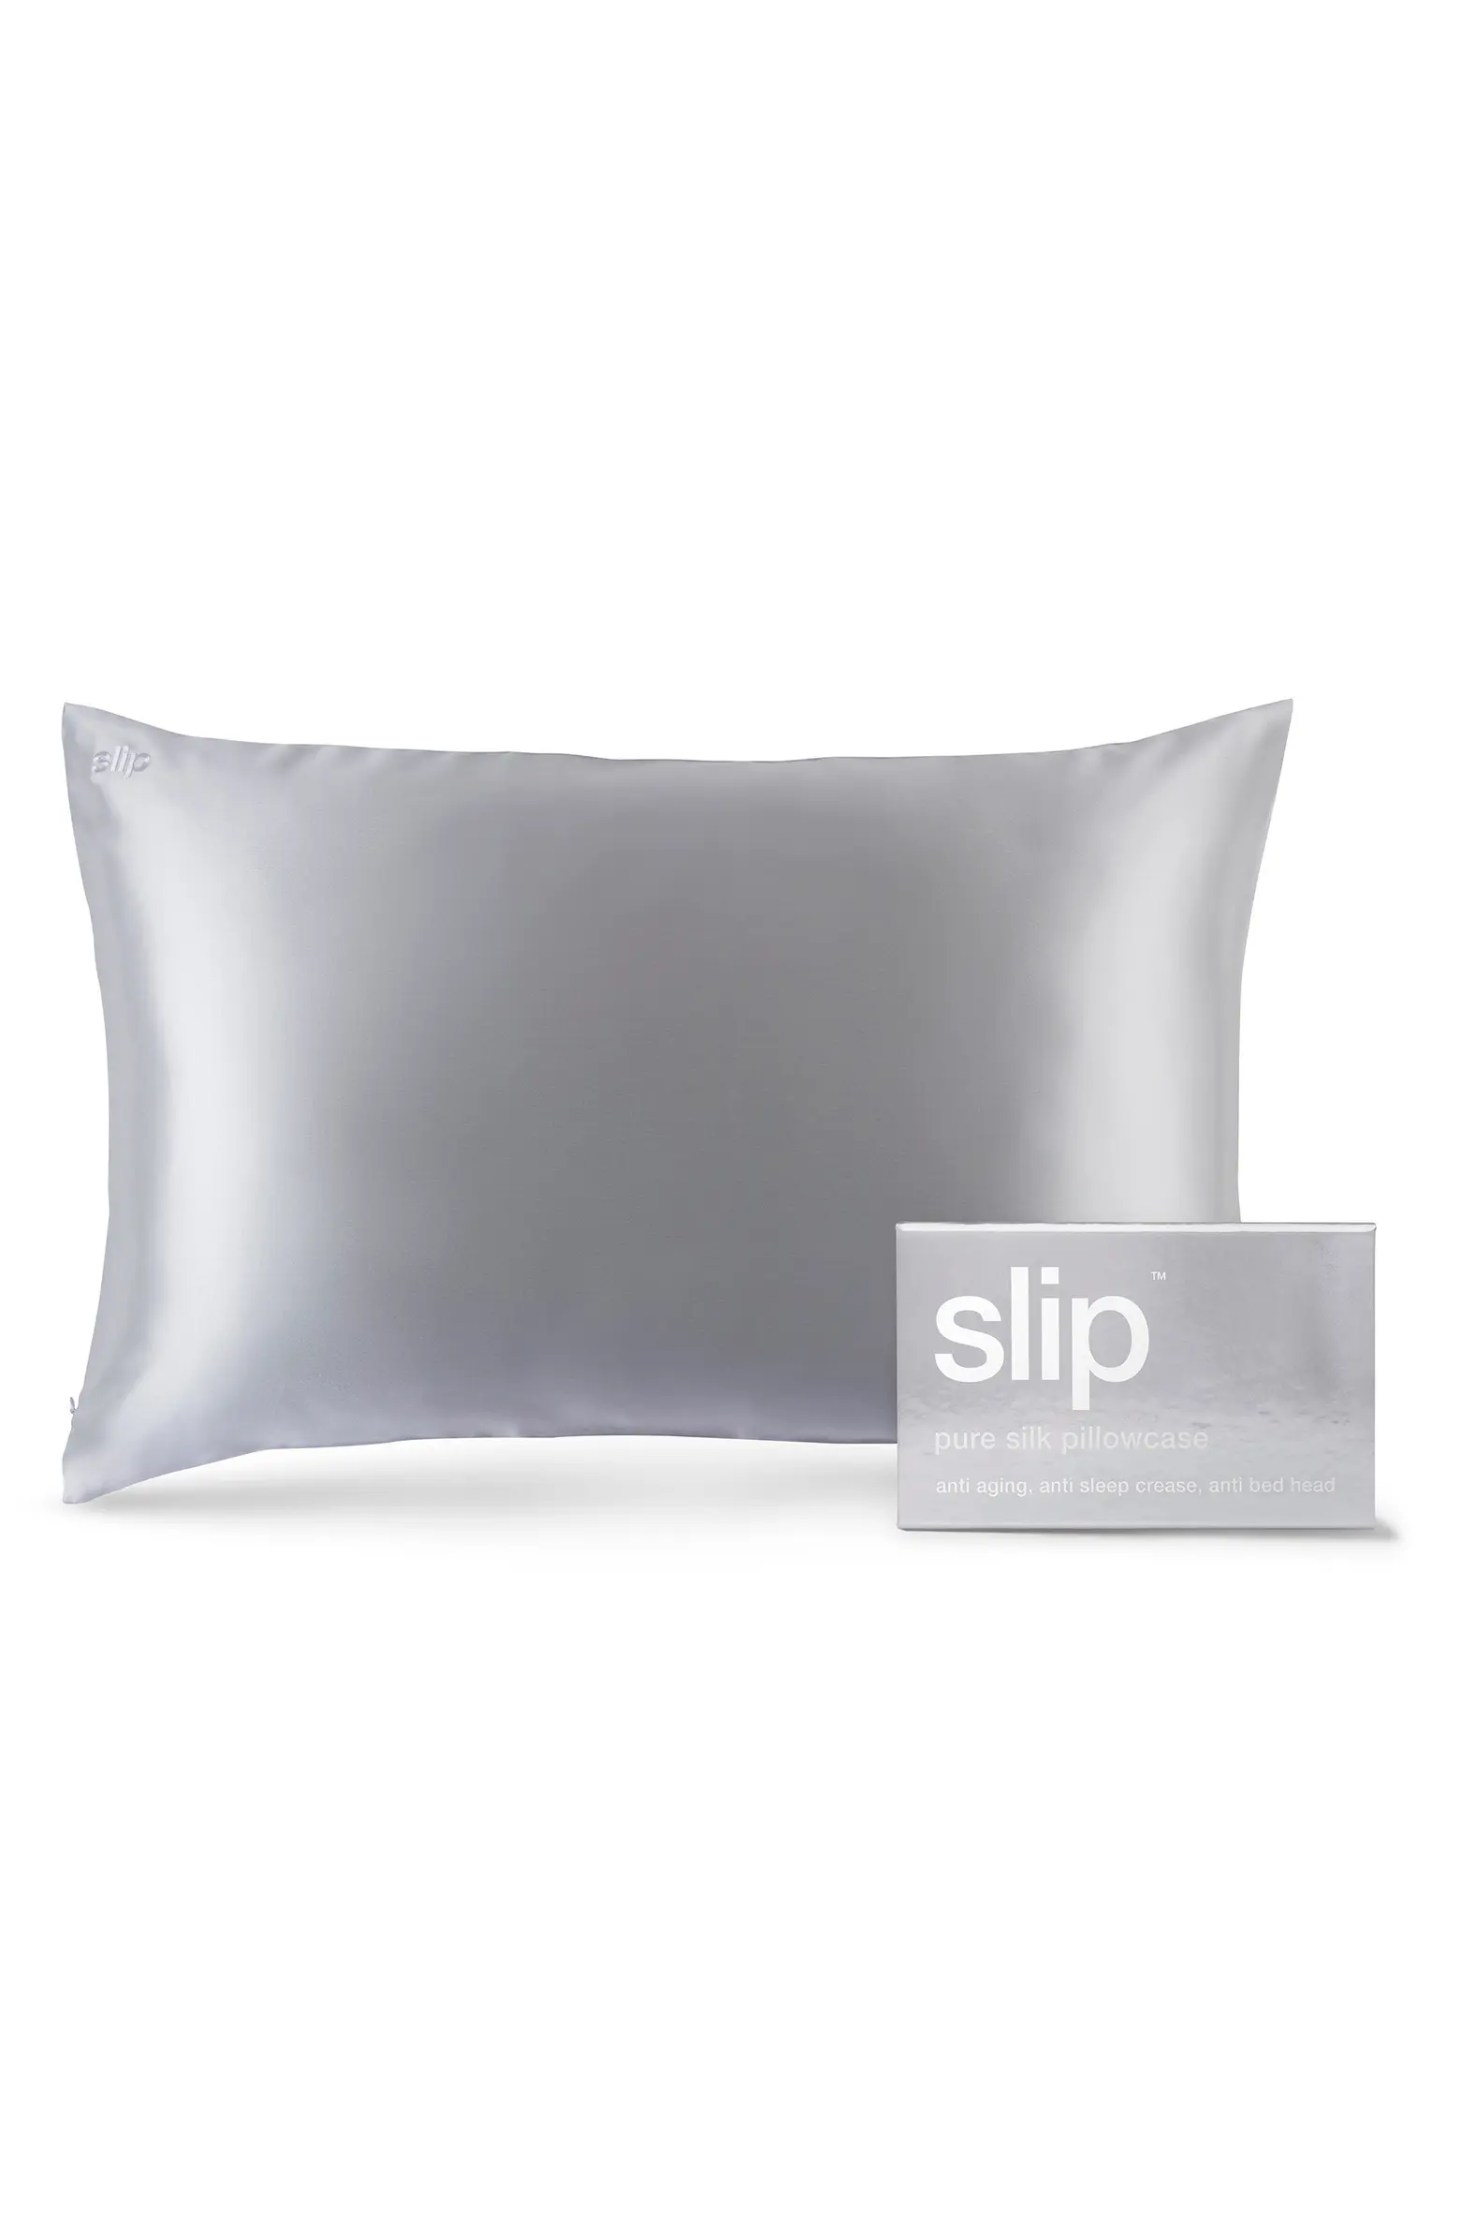 slip silk pillowcase and box on a white background